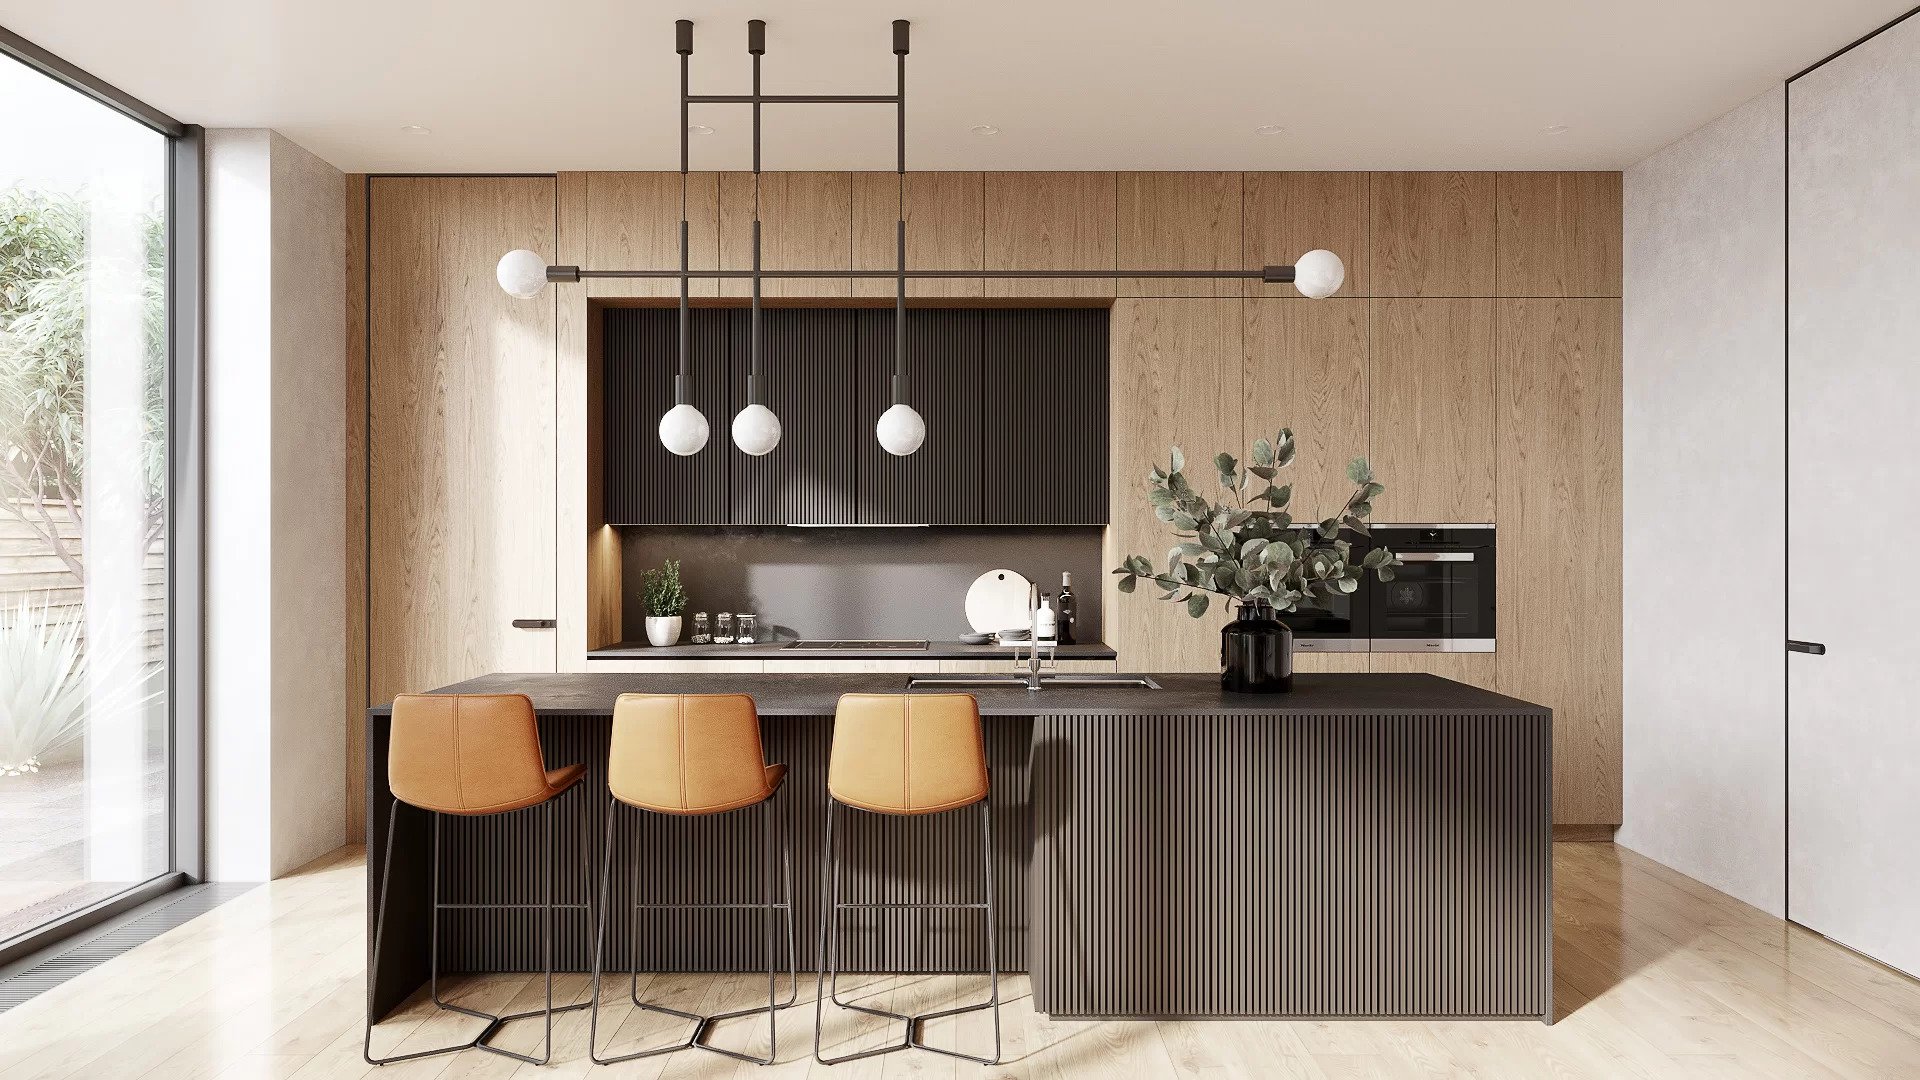 CG Interior Visualization of a Kitchen